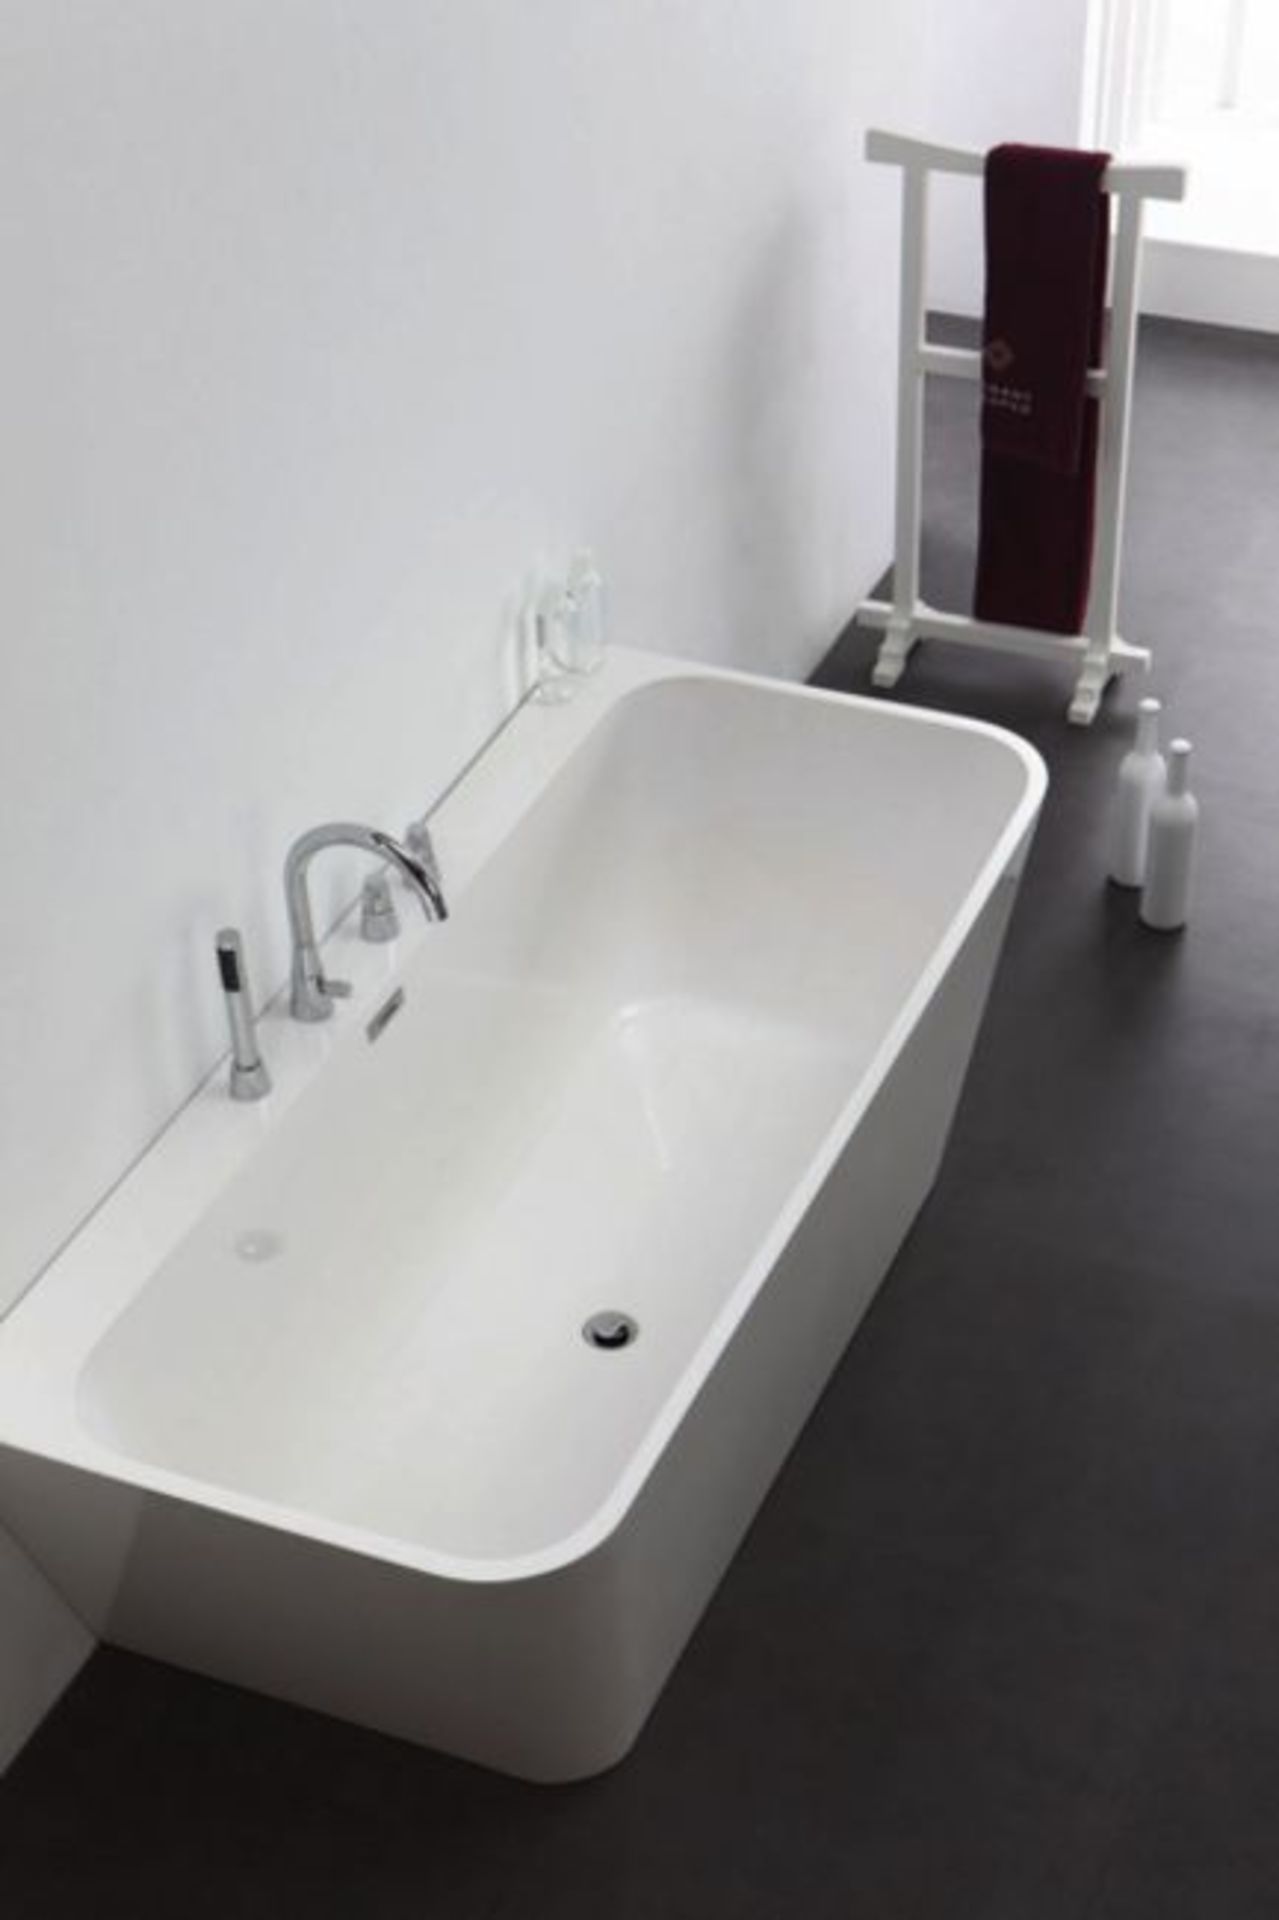 1 x MarbleTech Luxury Harmony Bath - Size: 1700 x 750 x 580 (mm) - Original RRP £2,100 - New and - Image 4 of 13